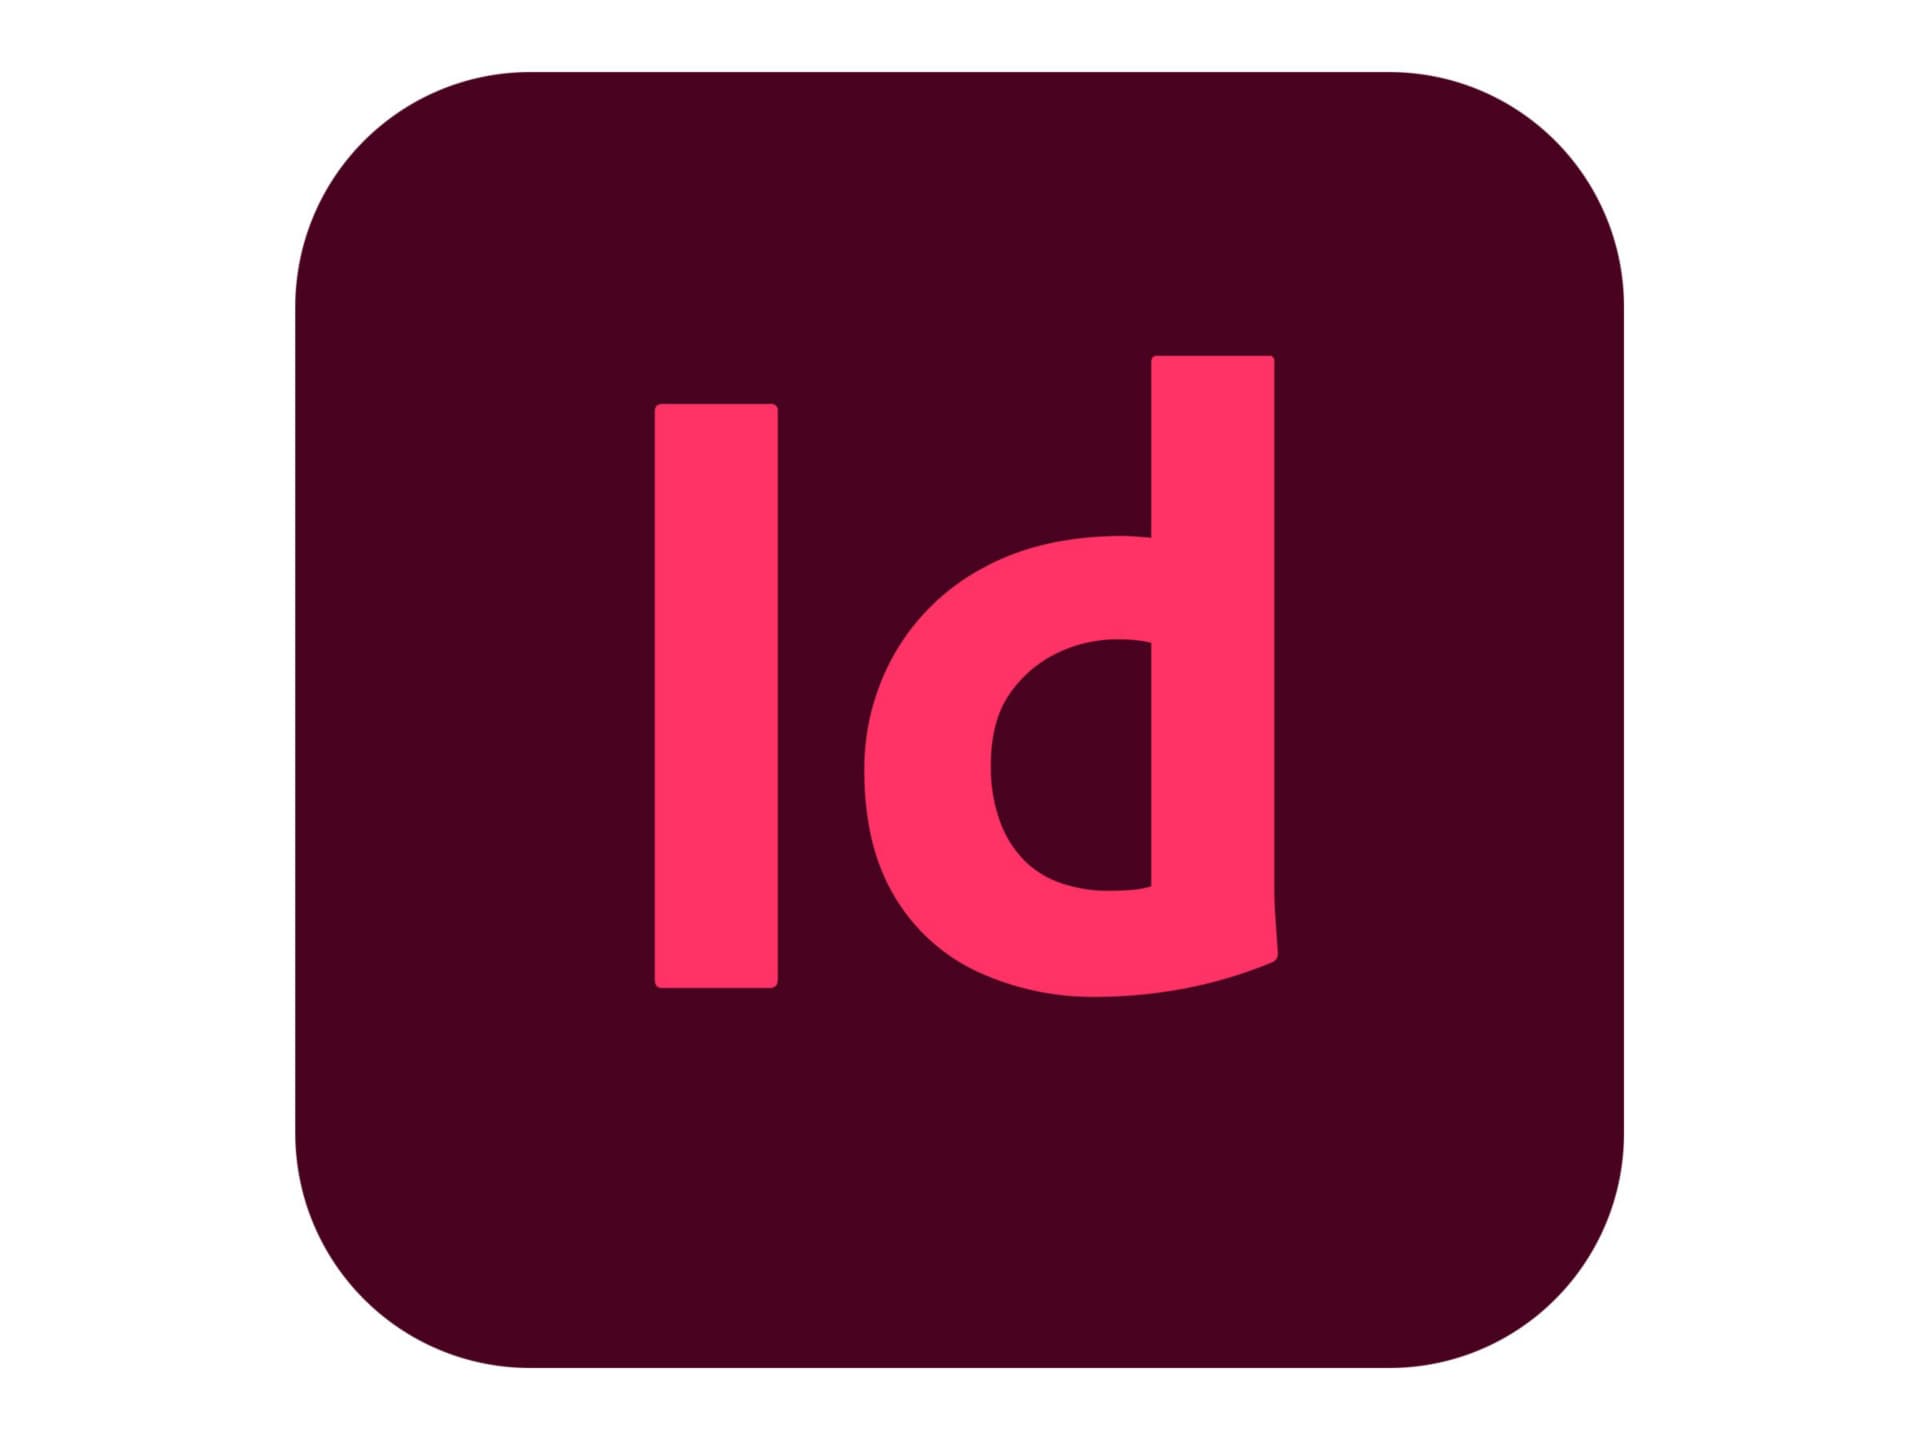 Adobe InDesign CC for Enterprise - Subscription New (3 months) - 1 named user